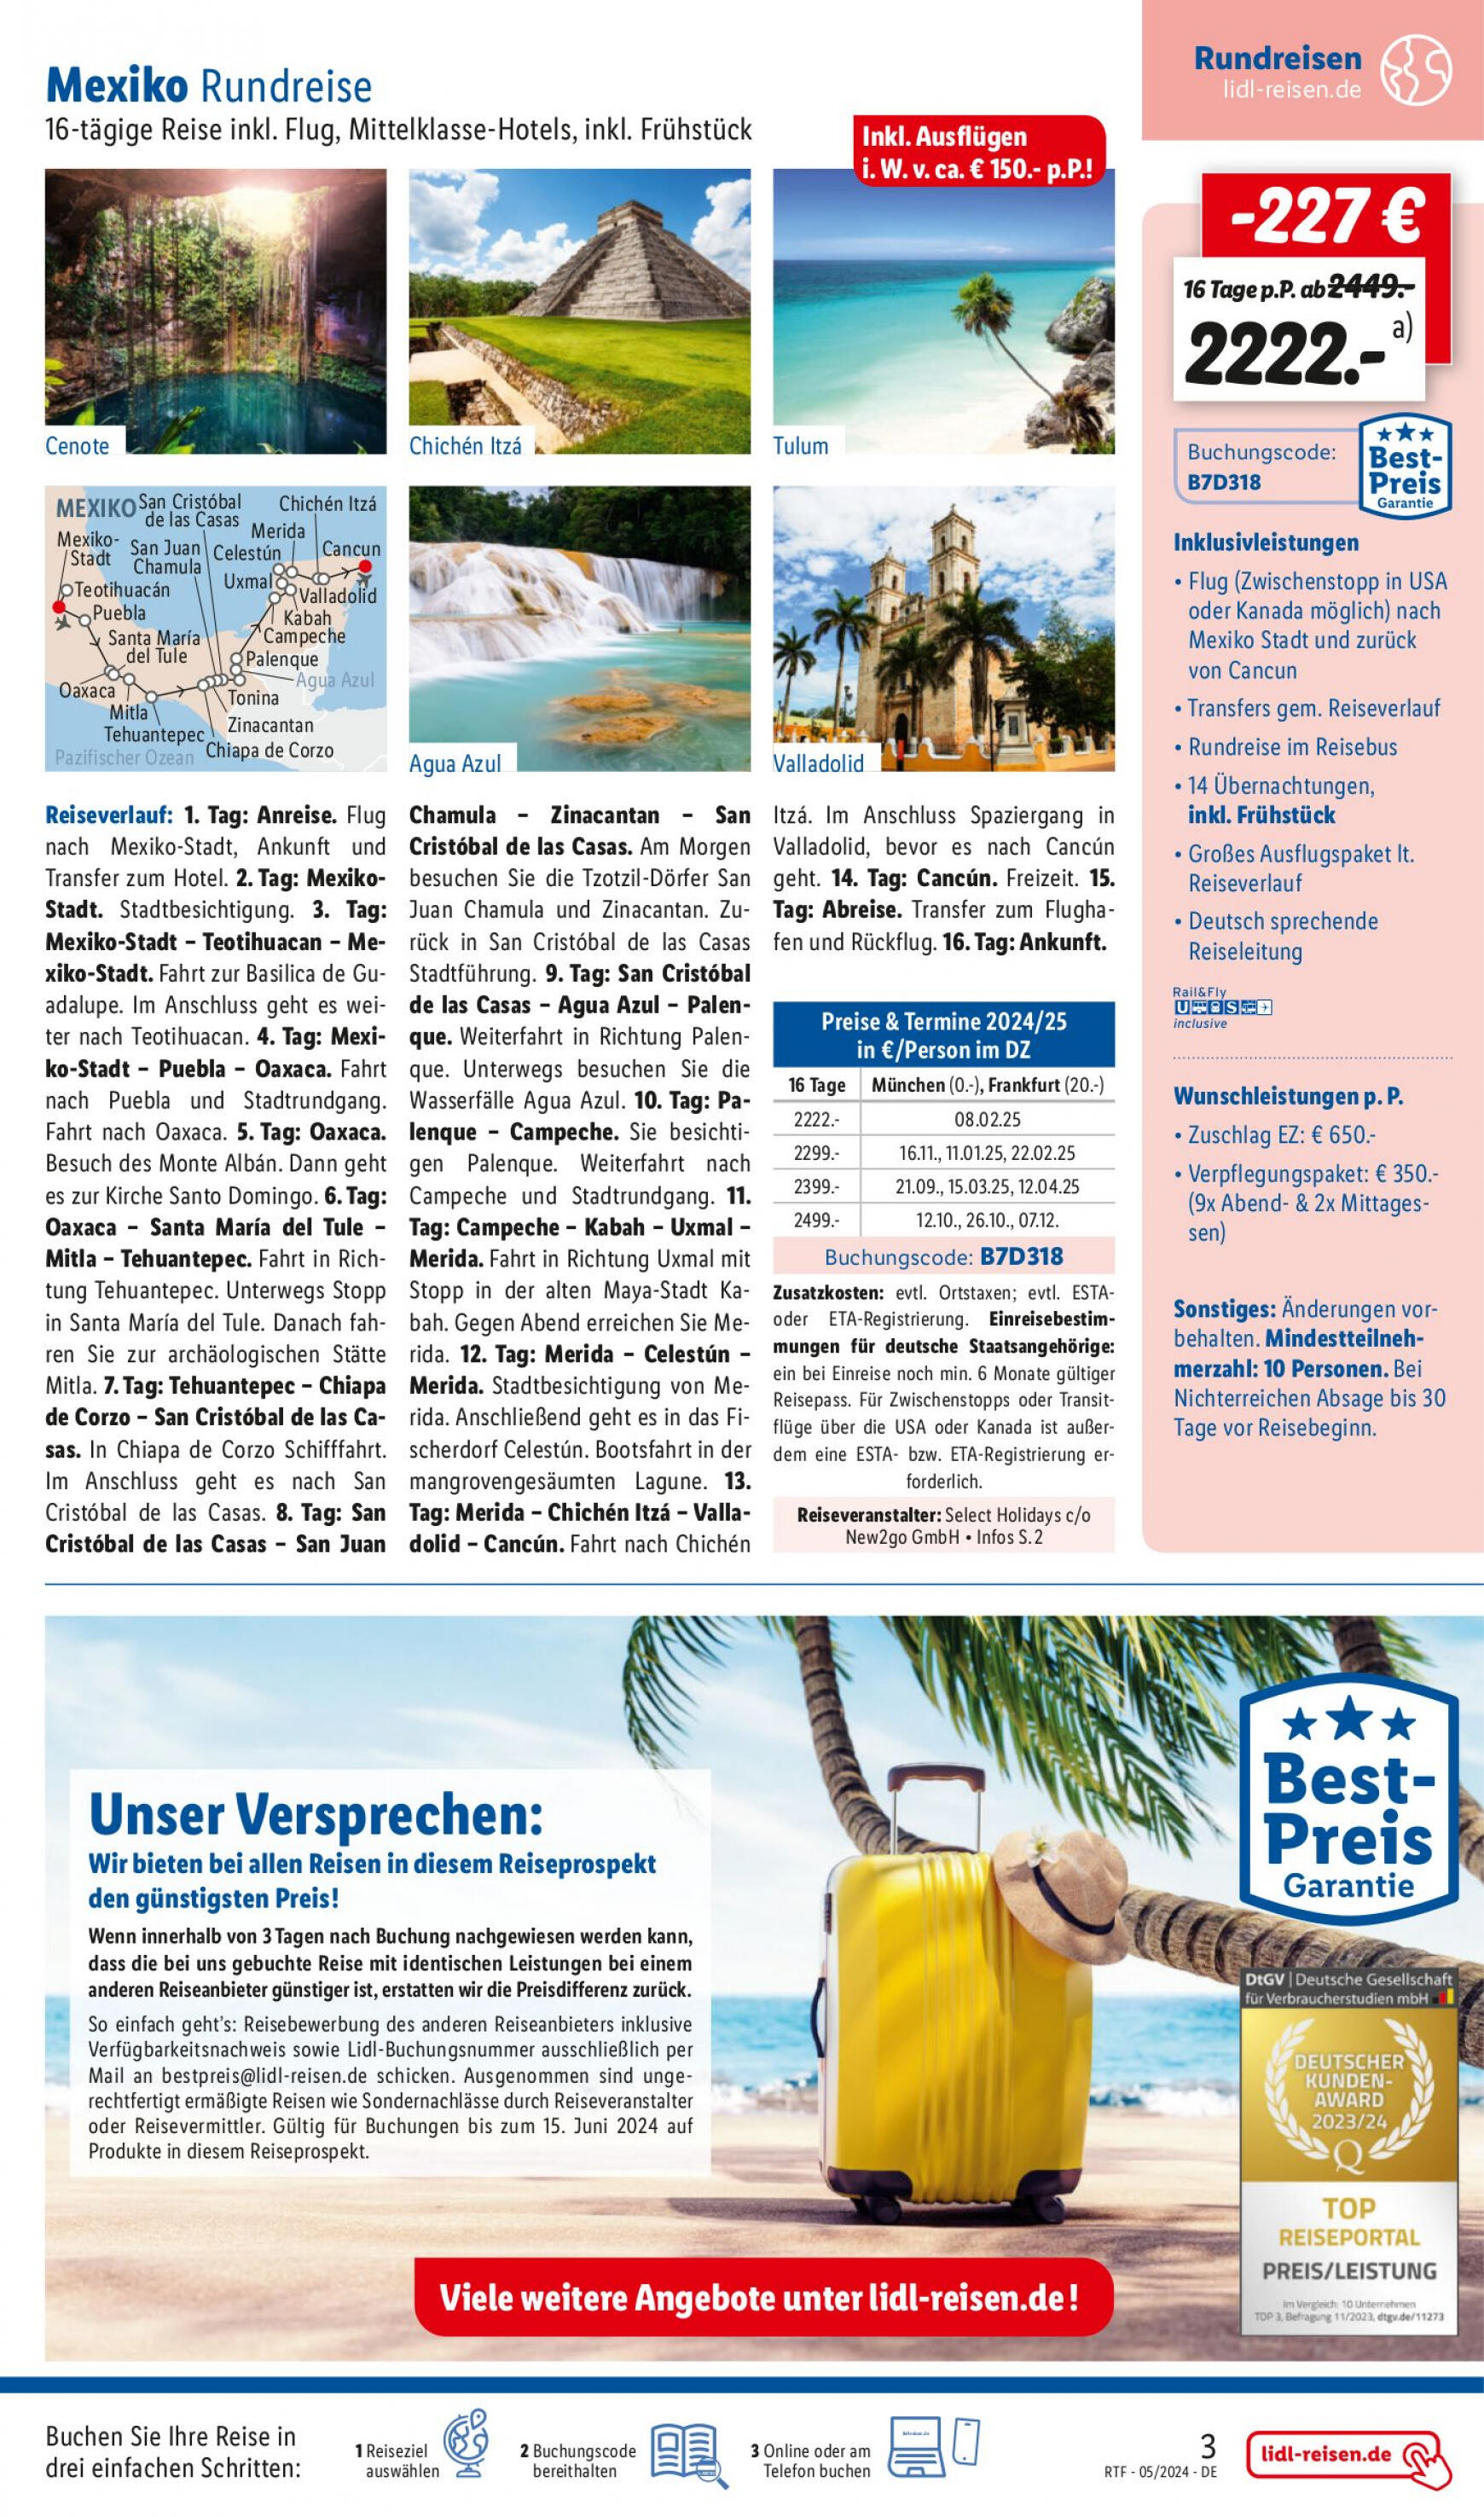 lidl - Flyer Lidl-reisen.de aktuell 15.05. - 15.06. - page: 3